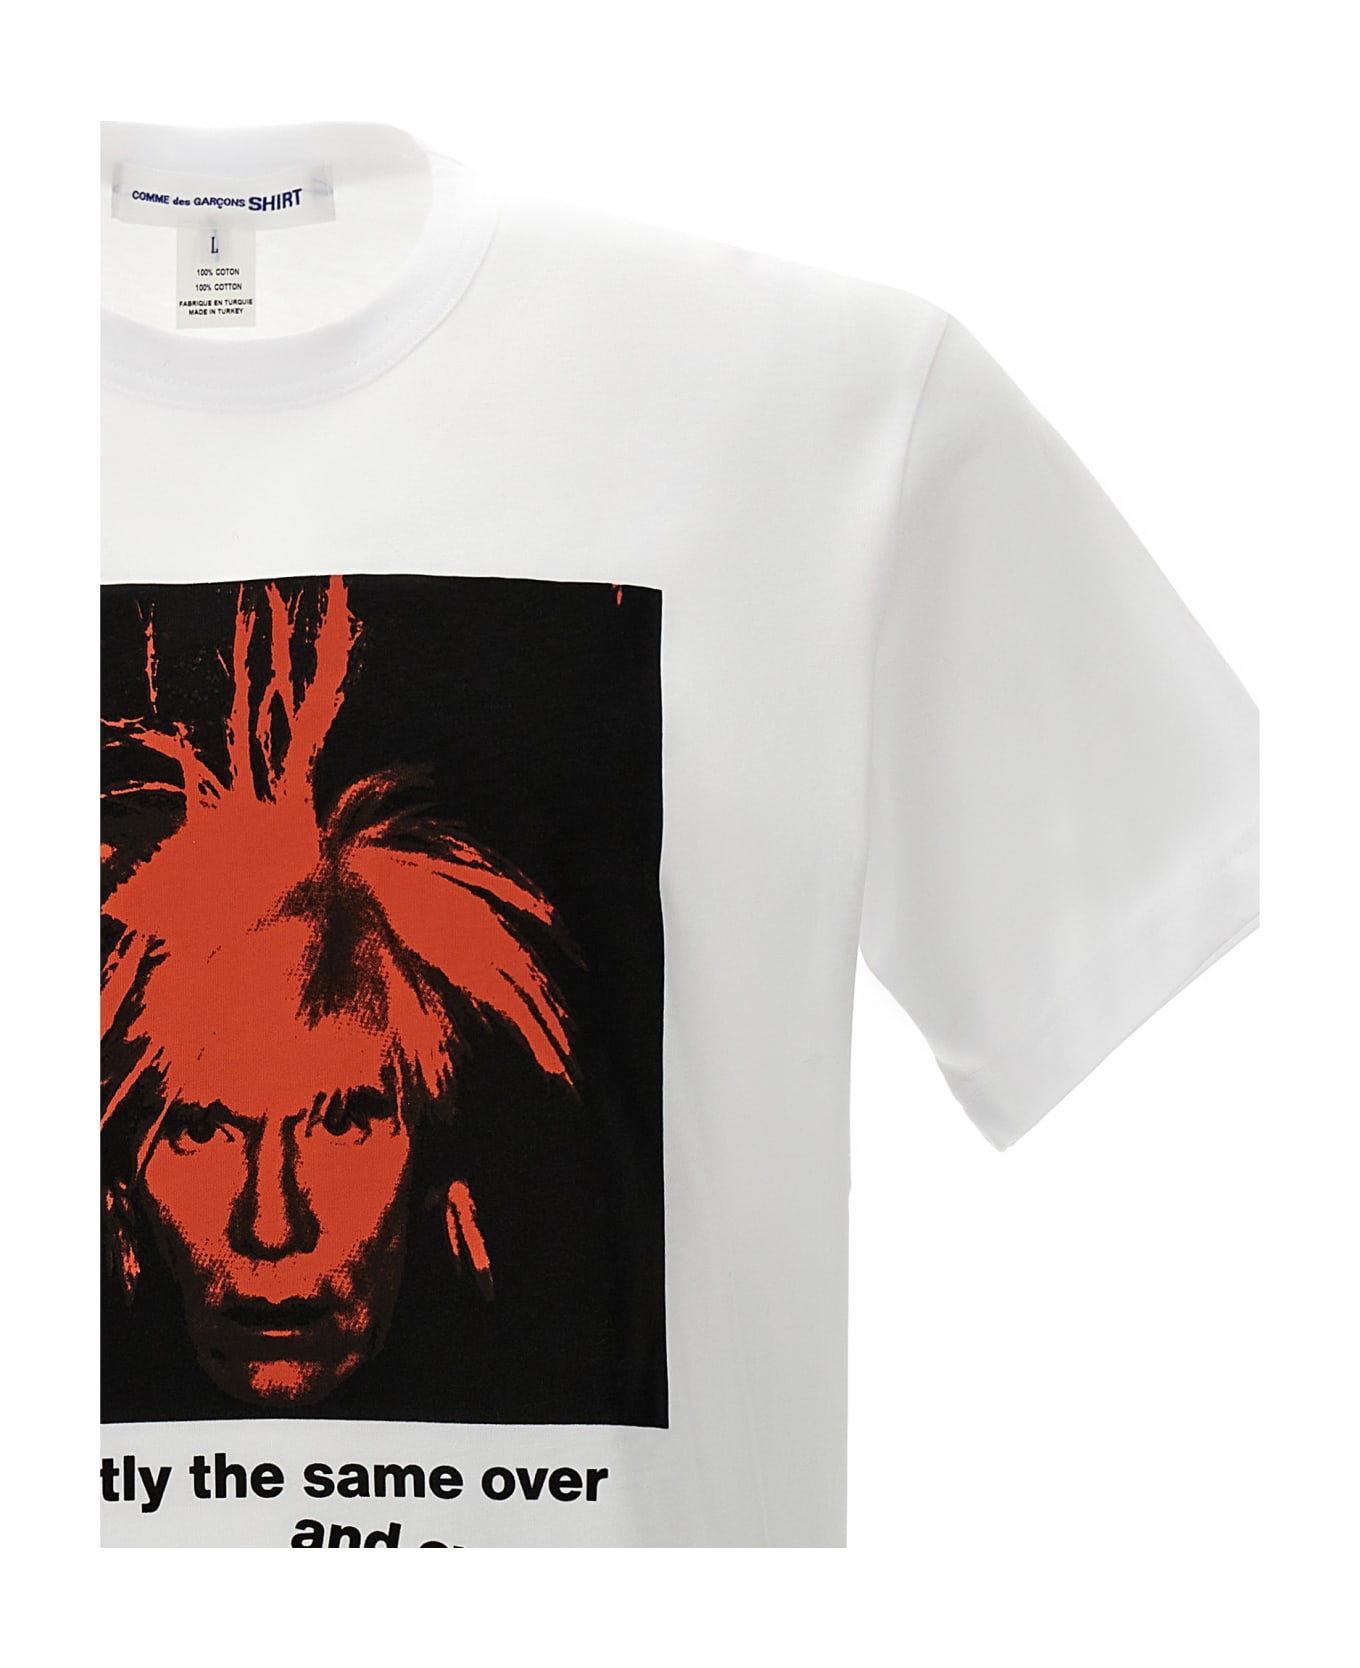 Comme des Garçons Shirt 'andy Warhol' T-shirt - White